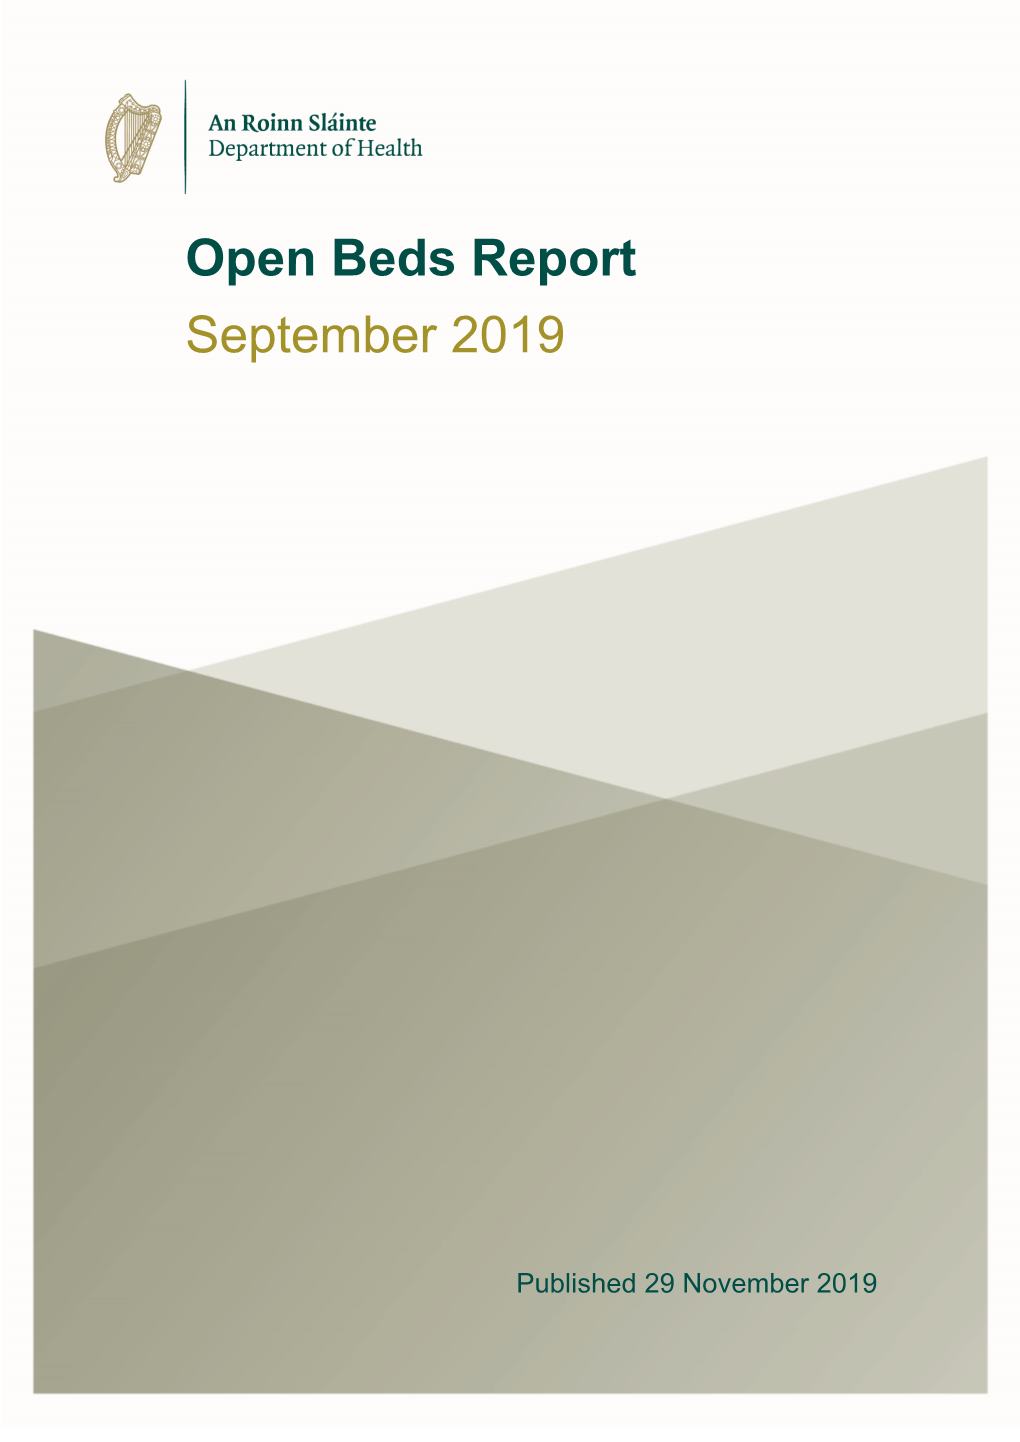 Open Beds Report September 2019